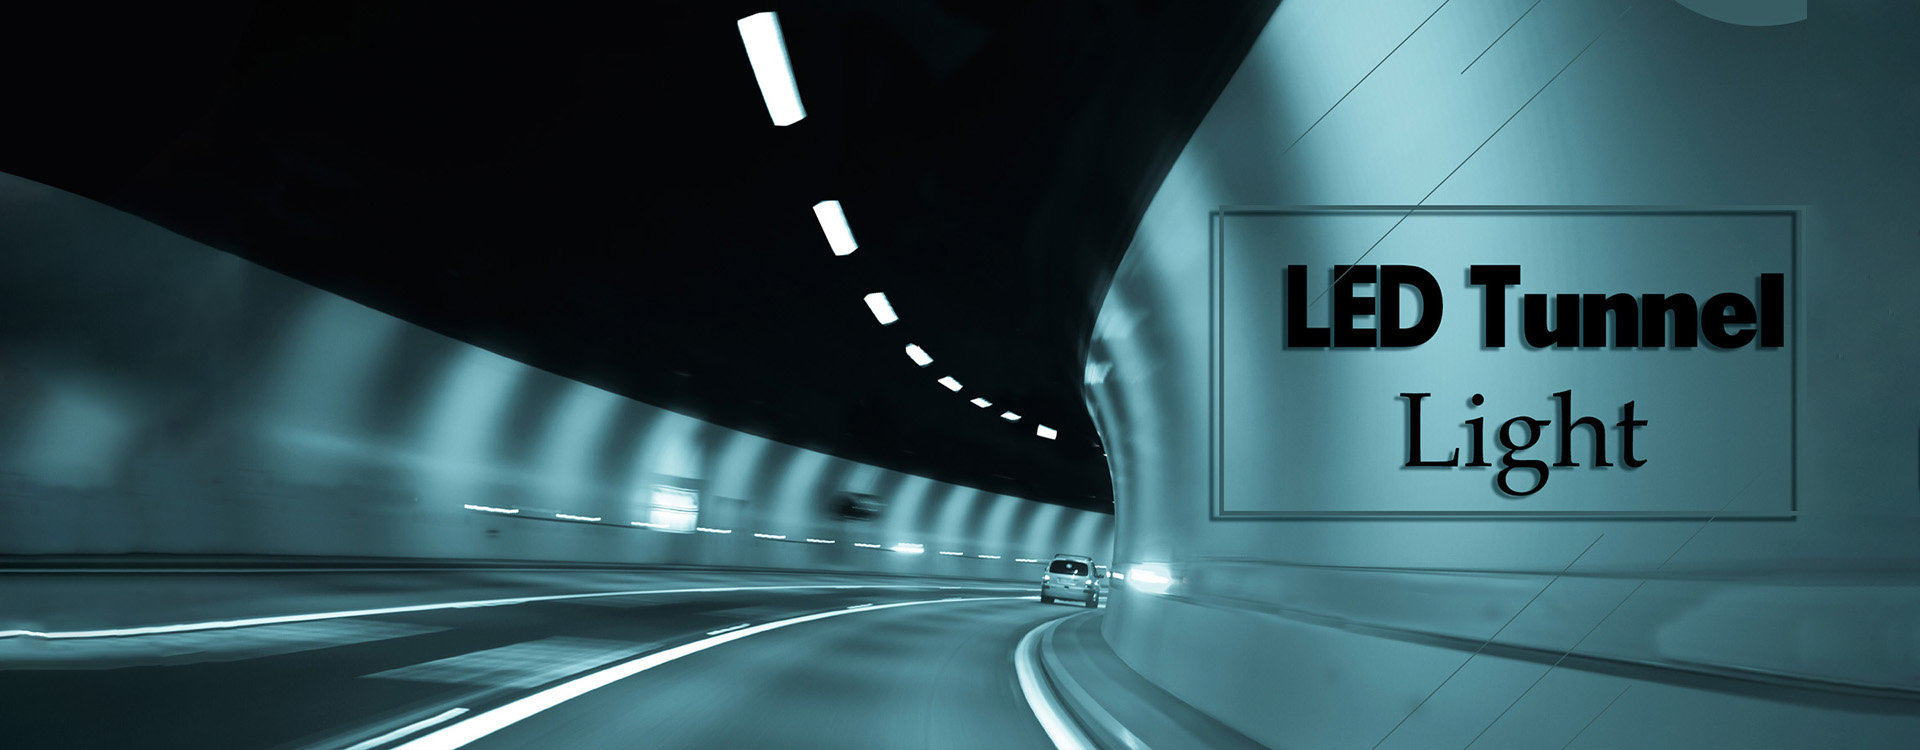 led-tunnel-light-2